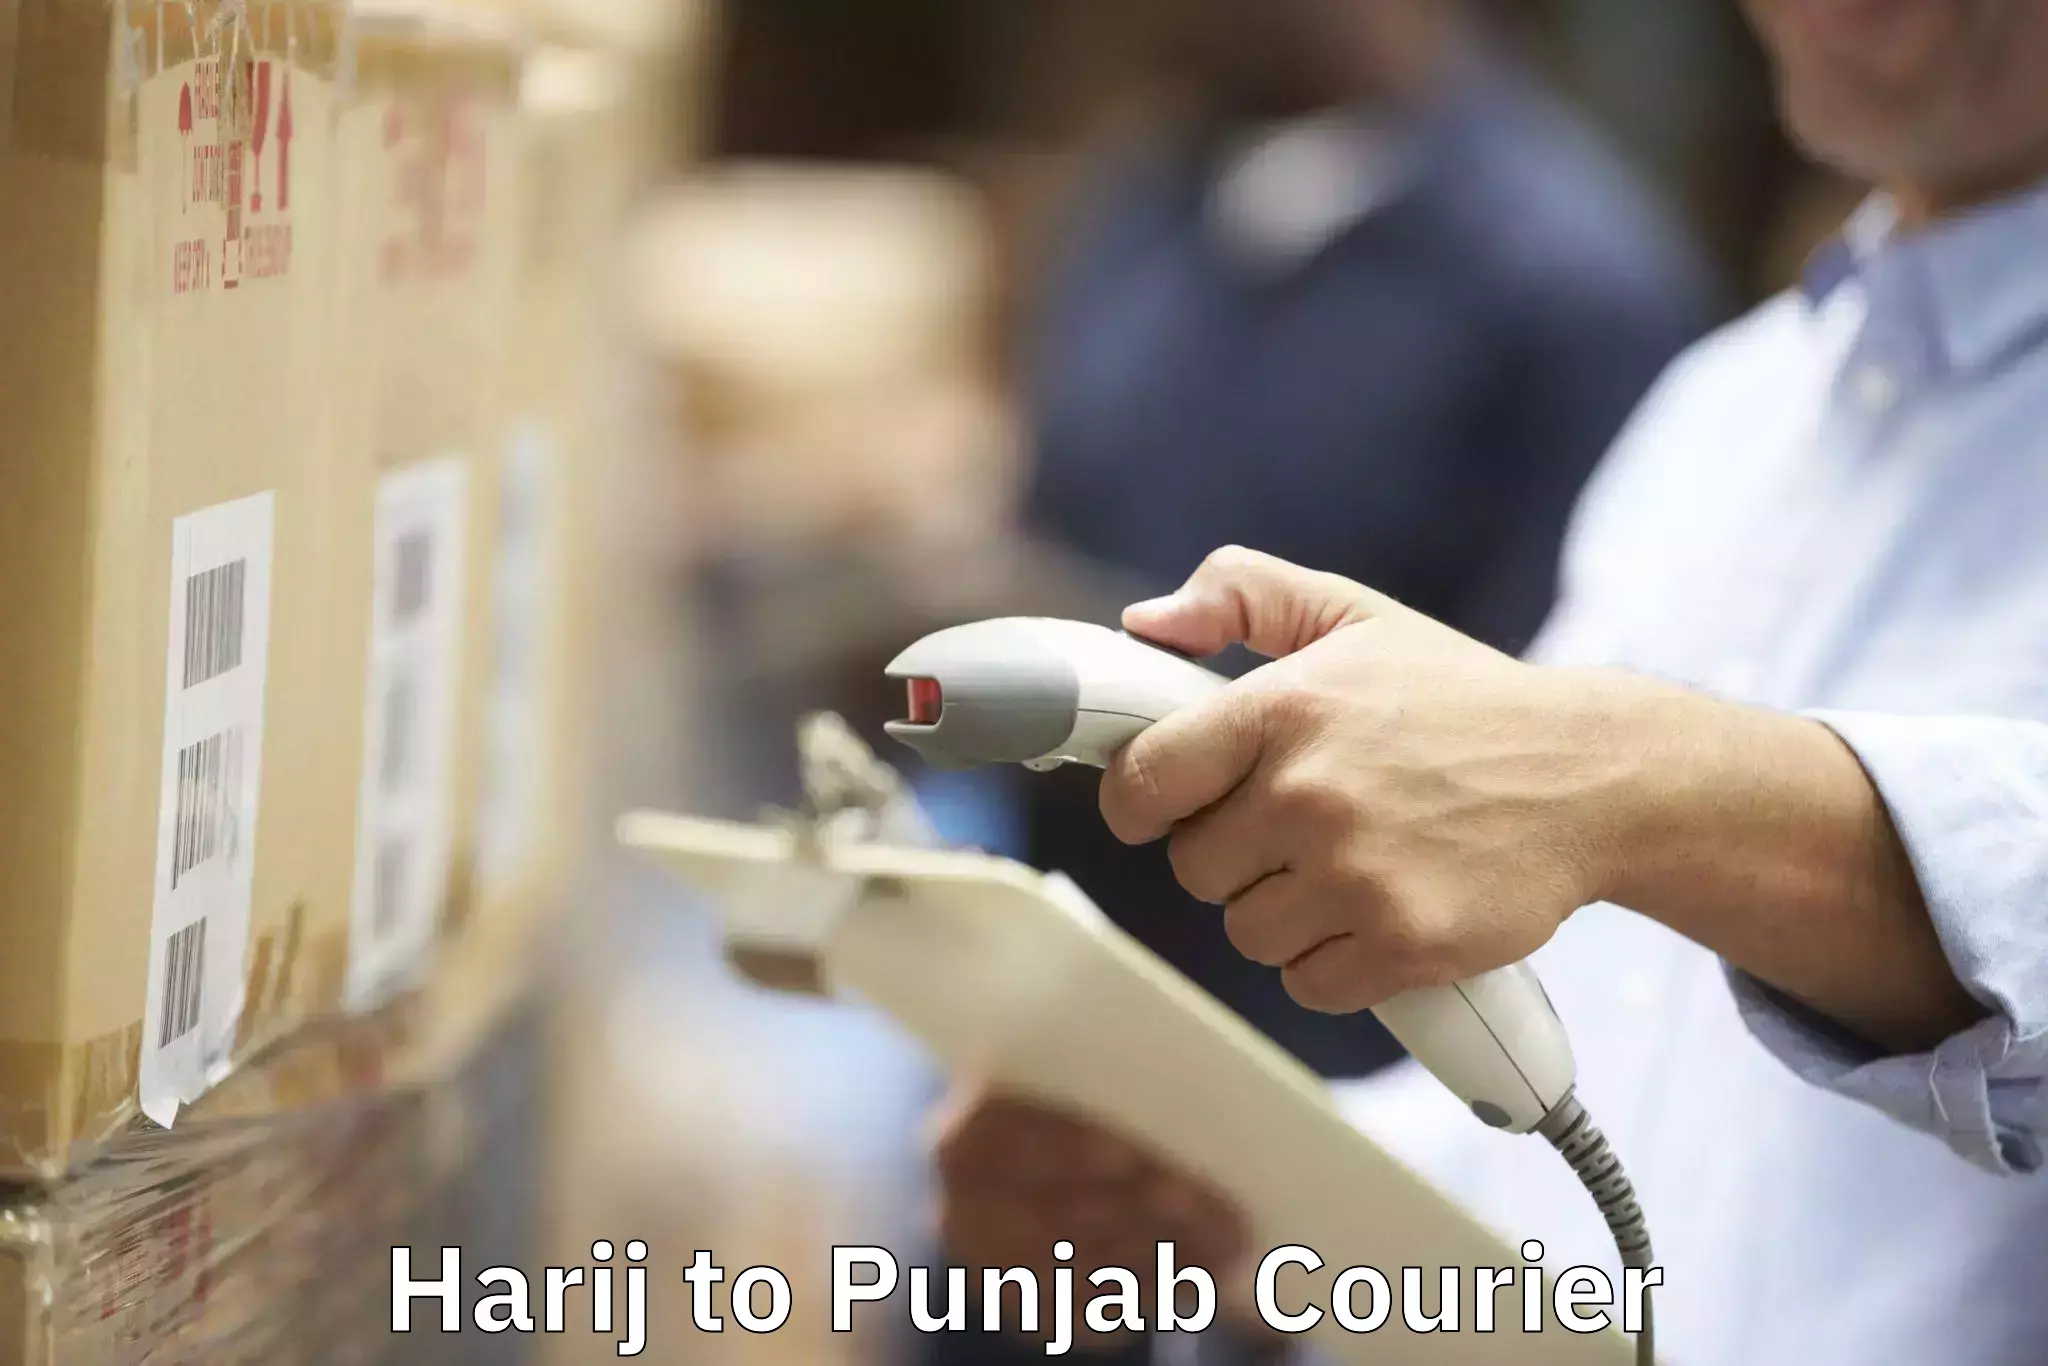 Home goods moving company Harij to Punjab